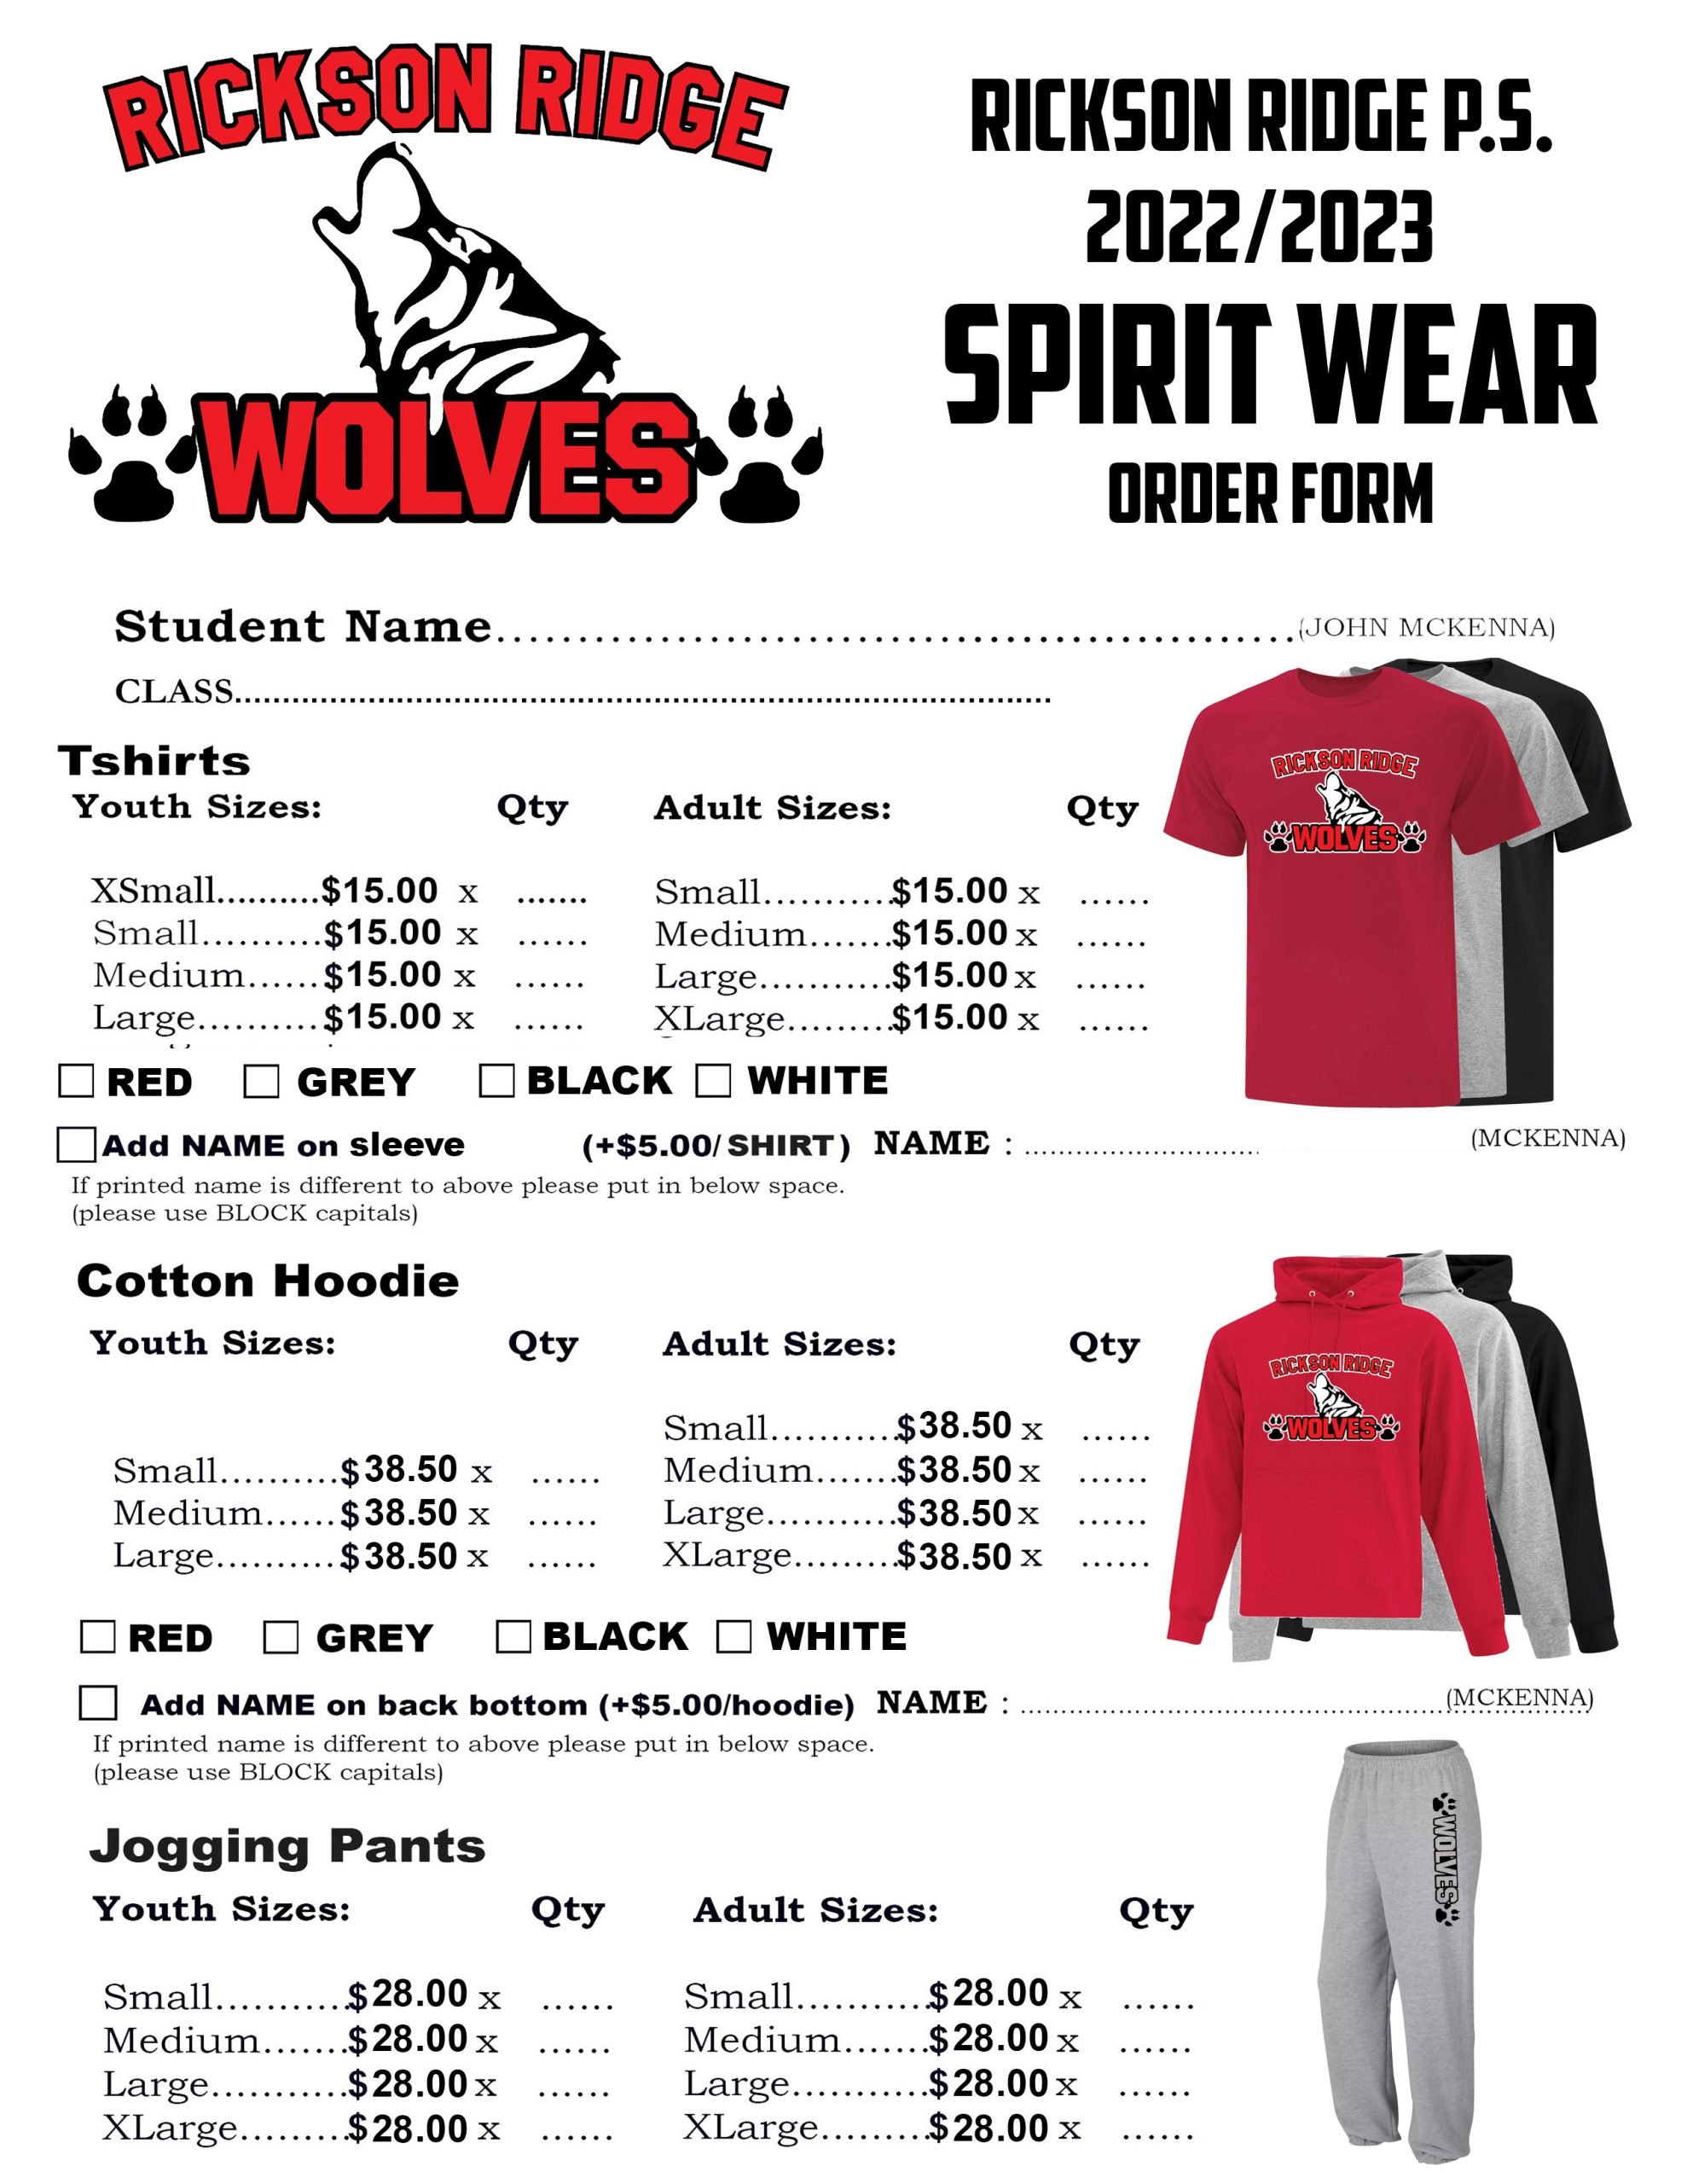 Spirit Wear (Rickson Ridge Public School)